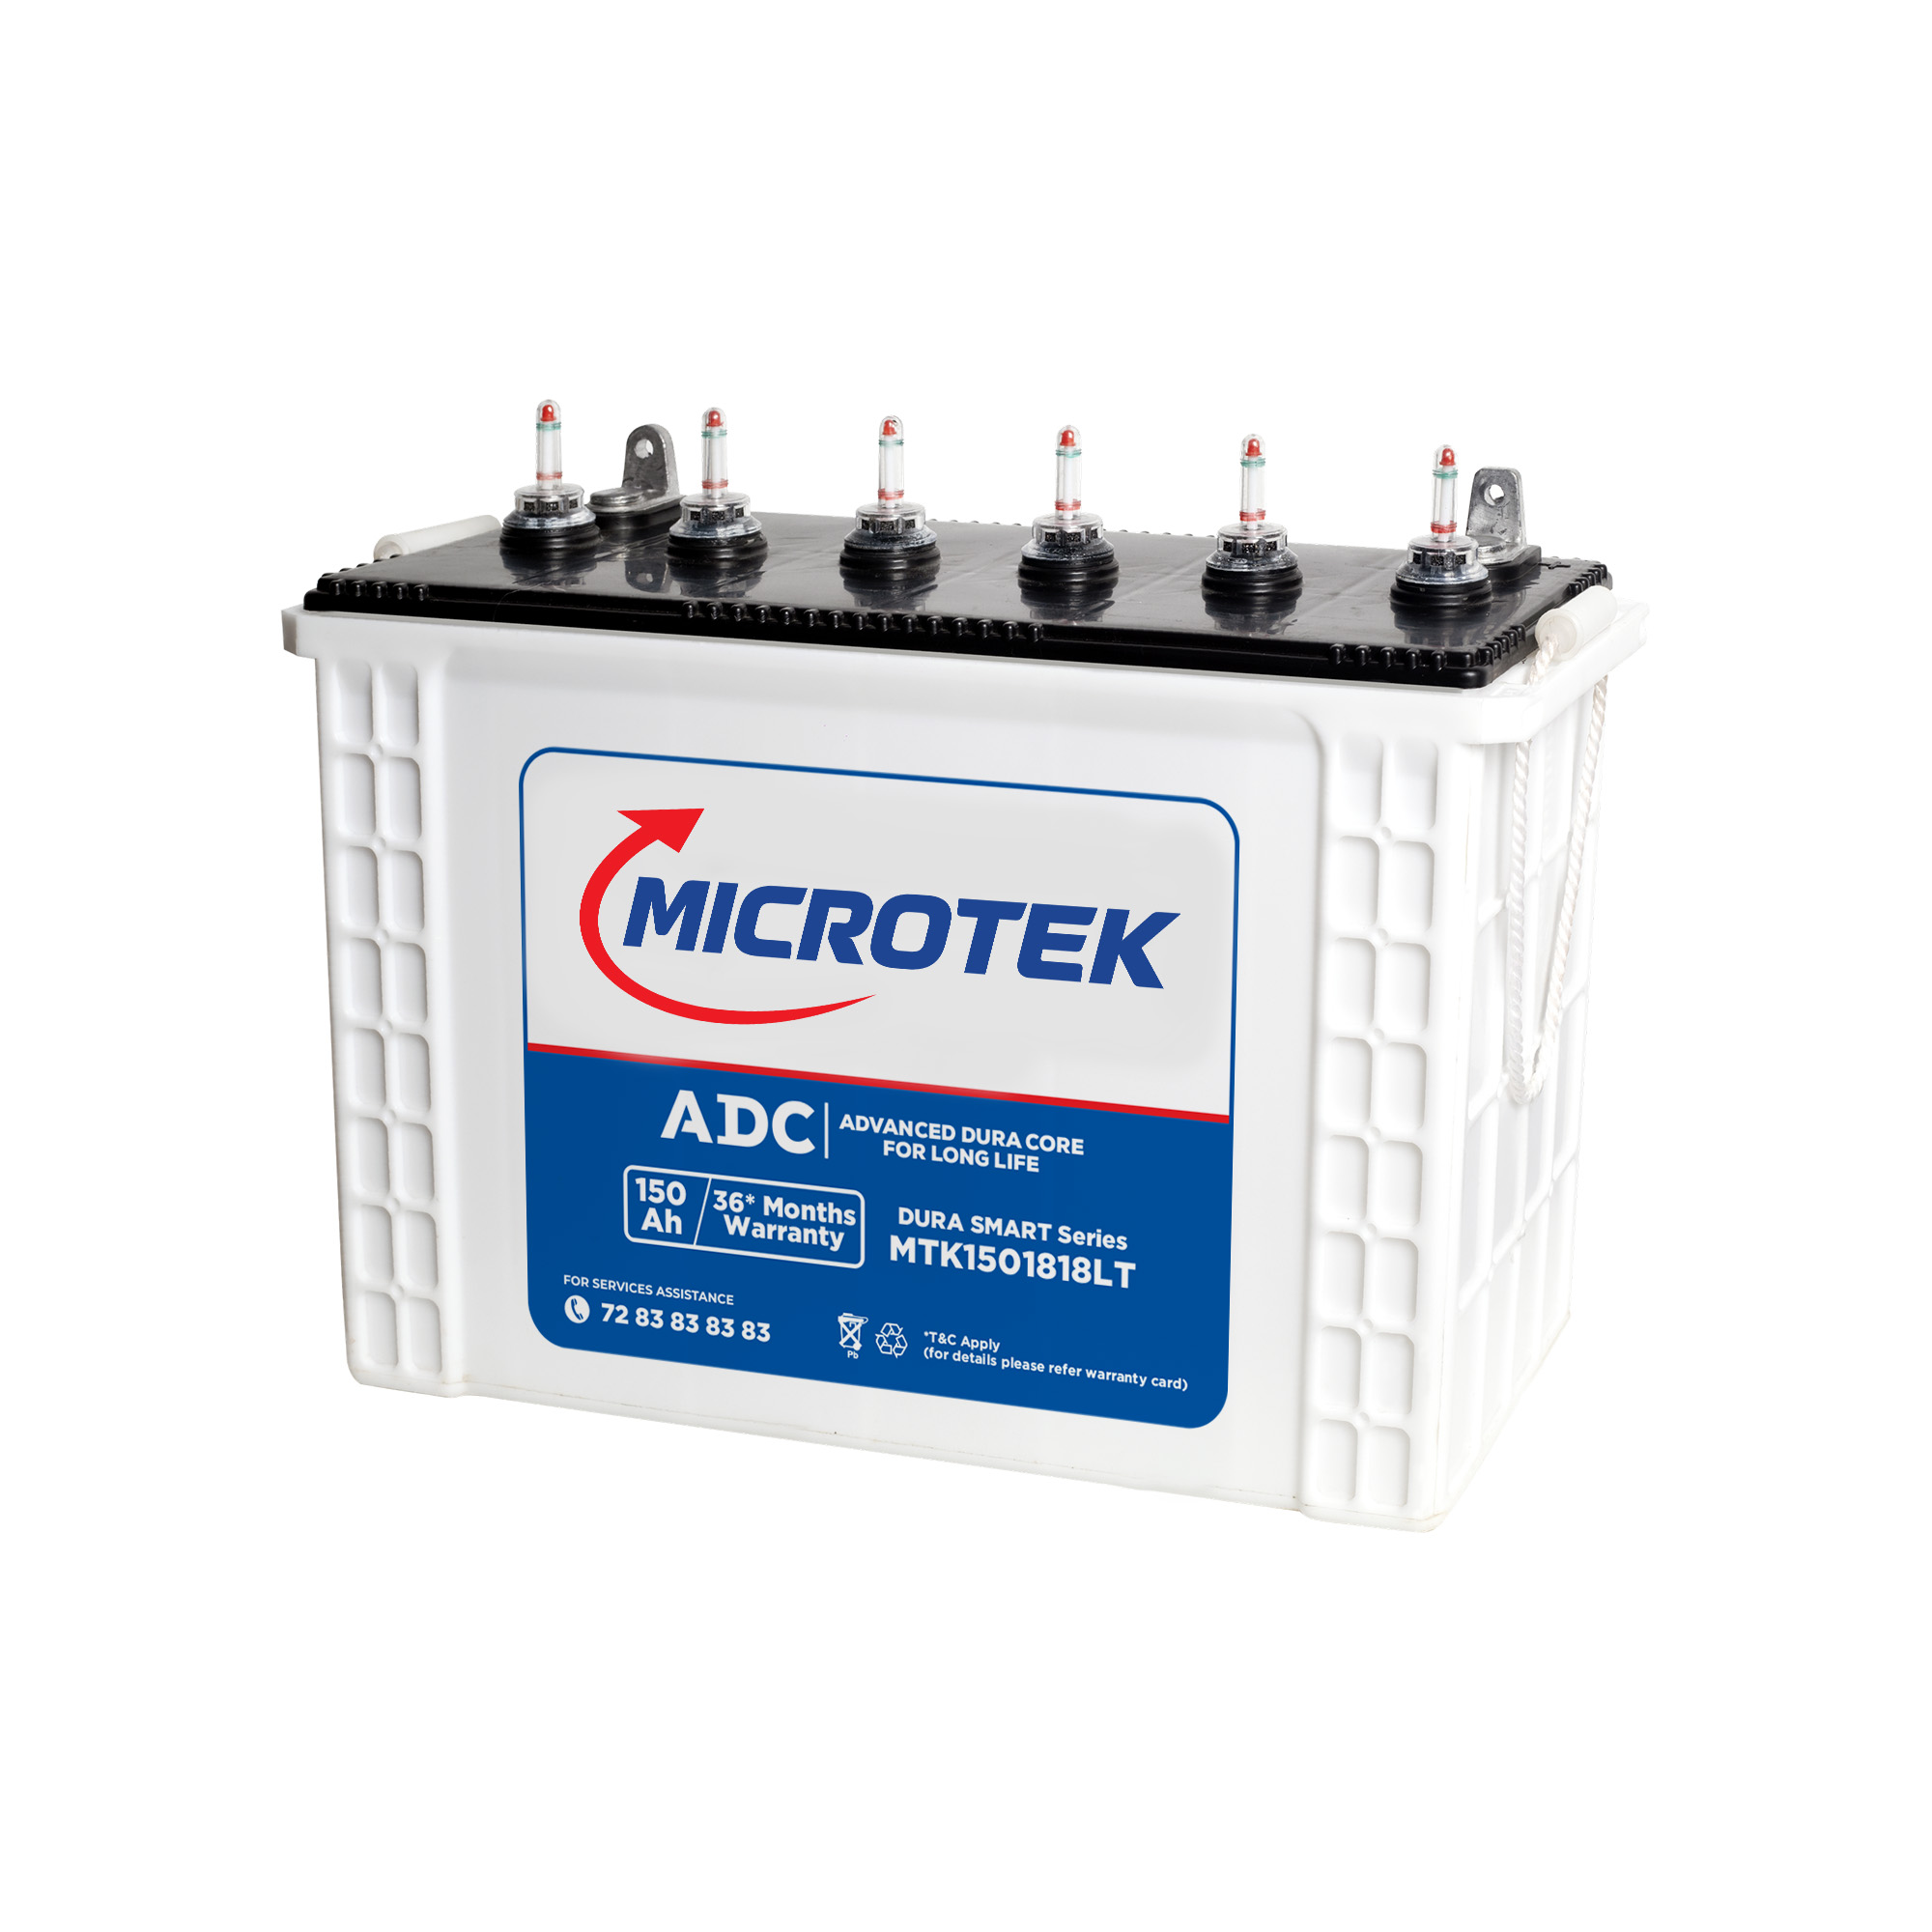  Microtek Dura SMART MTK1501818LT 150Ah/12V Inverter Battery With Advanced Dura Core Technology